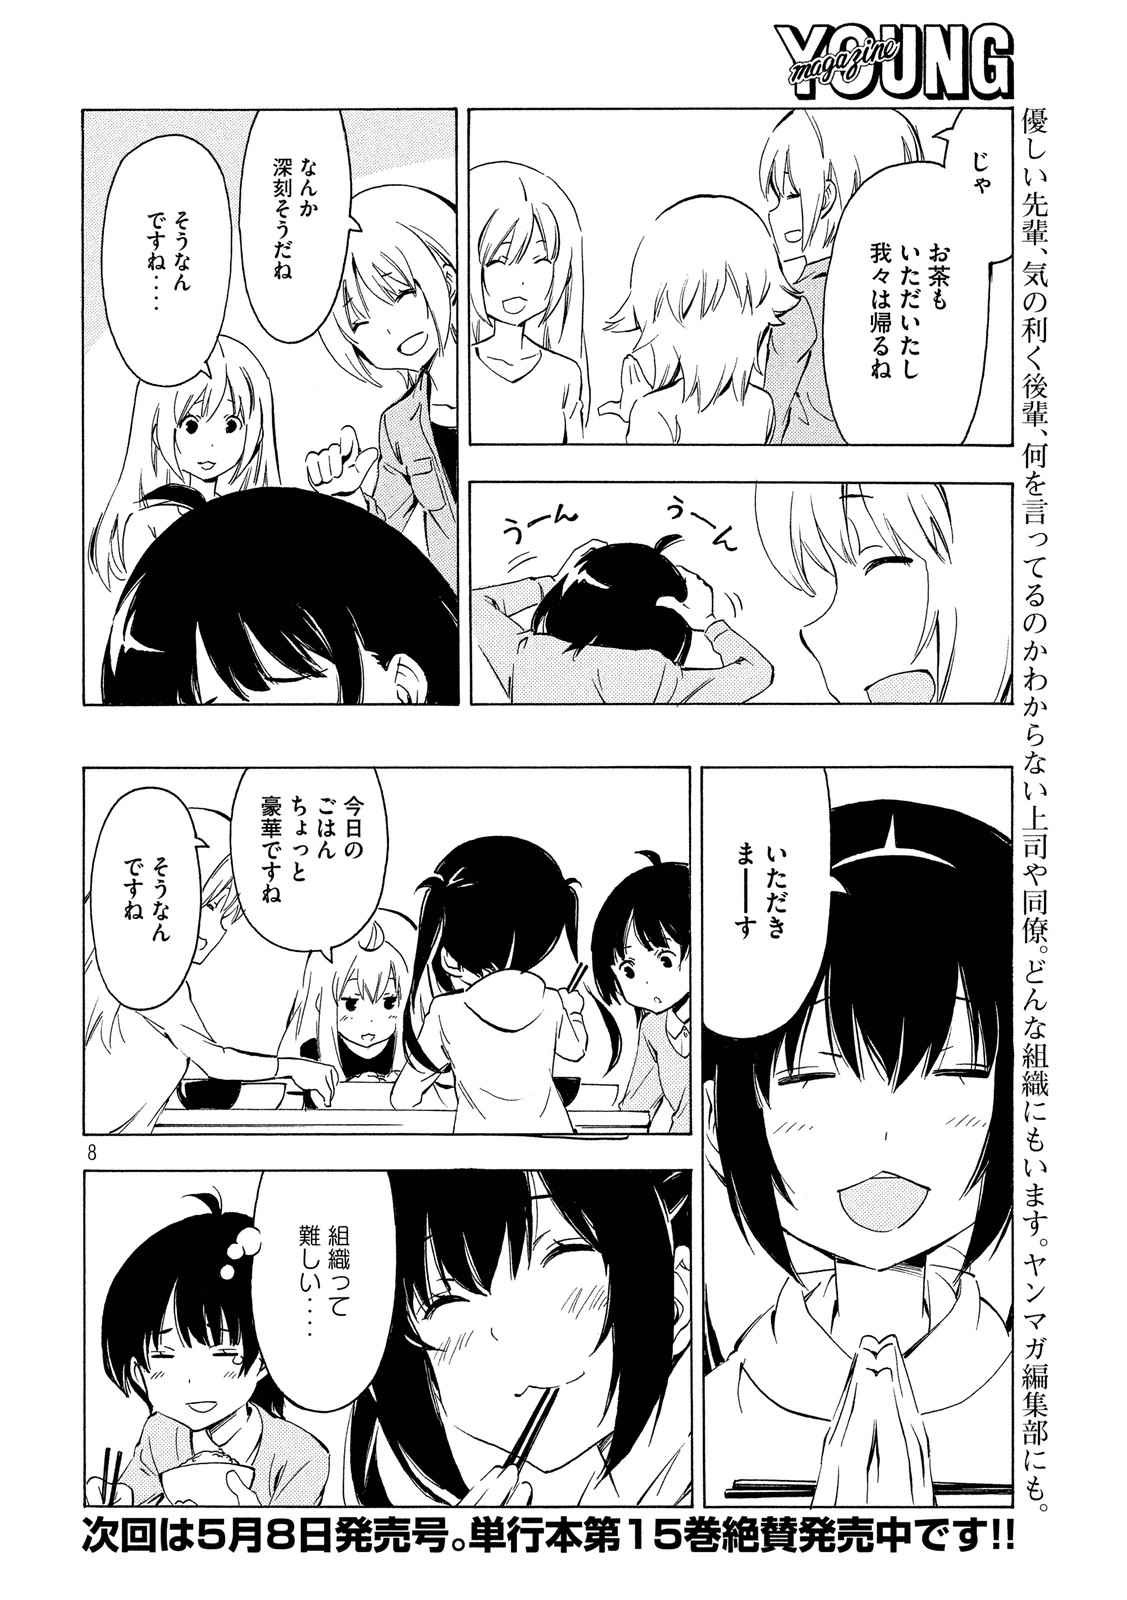 Minami-ke - Chapter 315 - Page 8